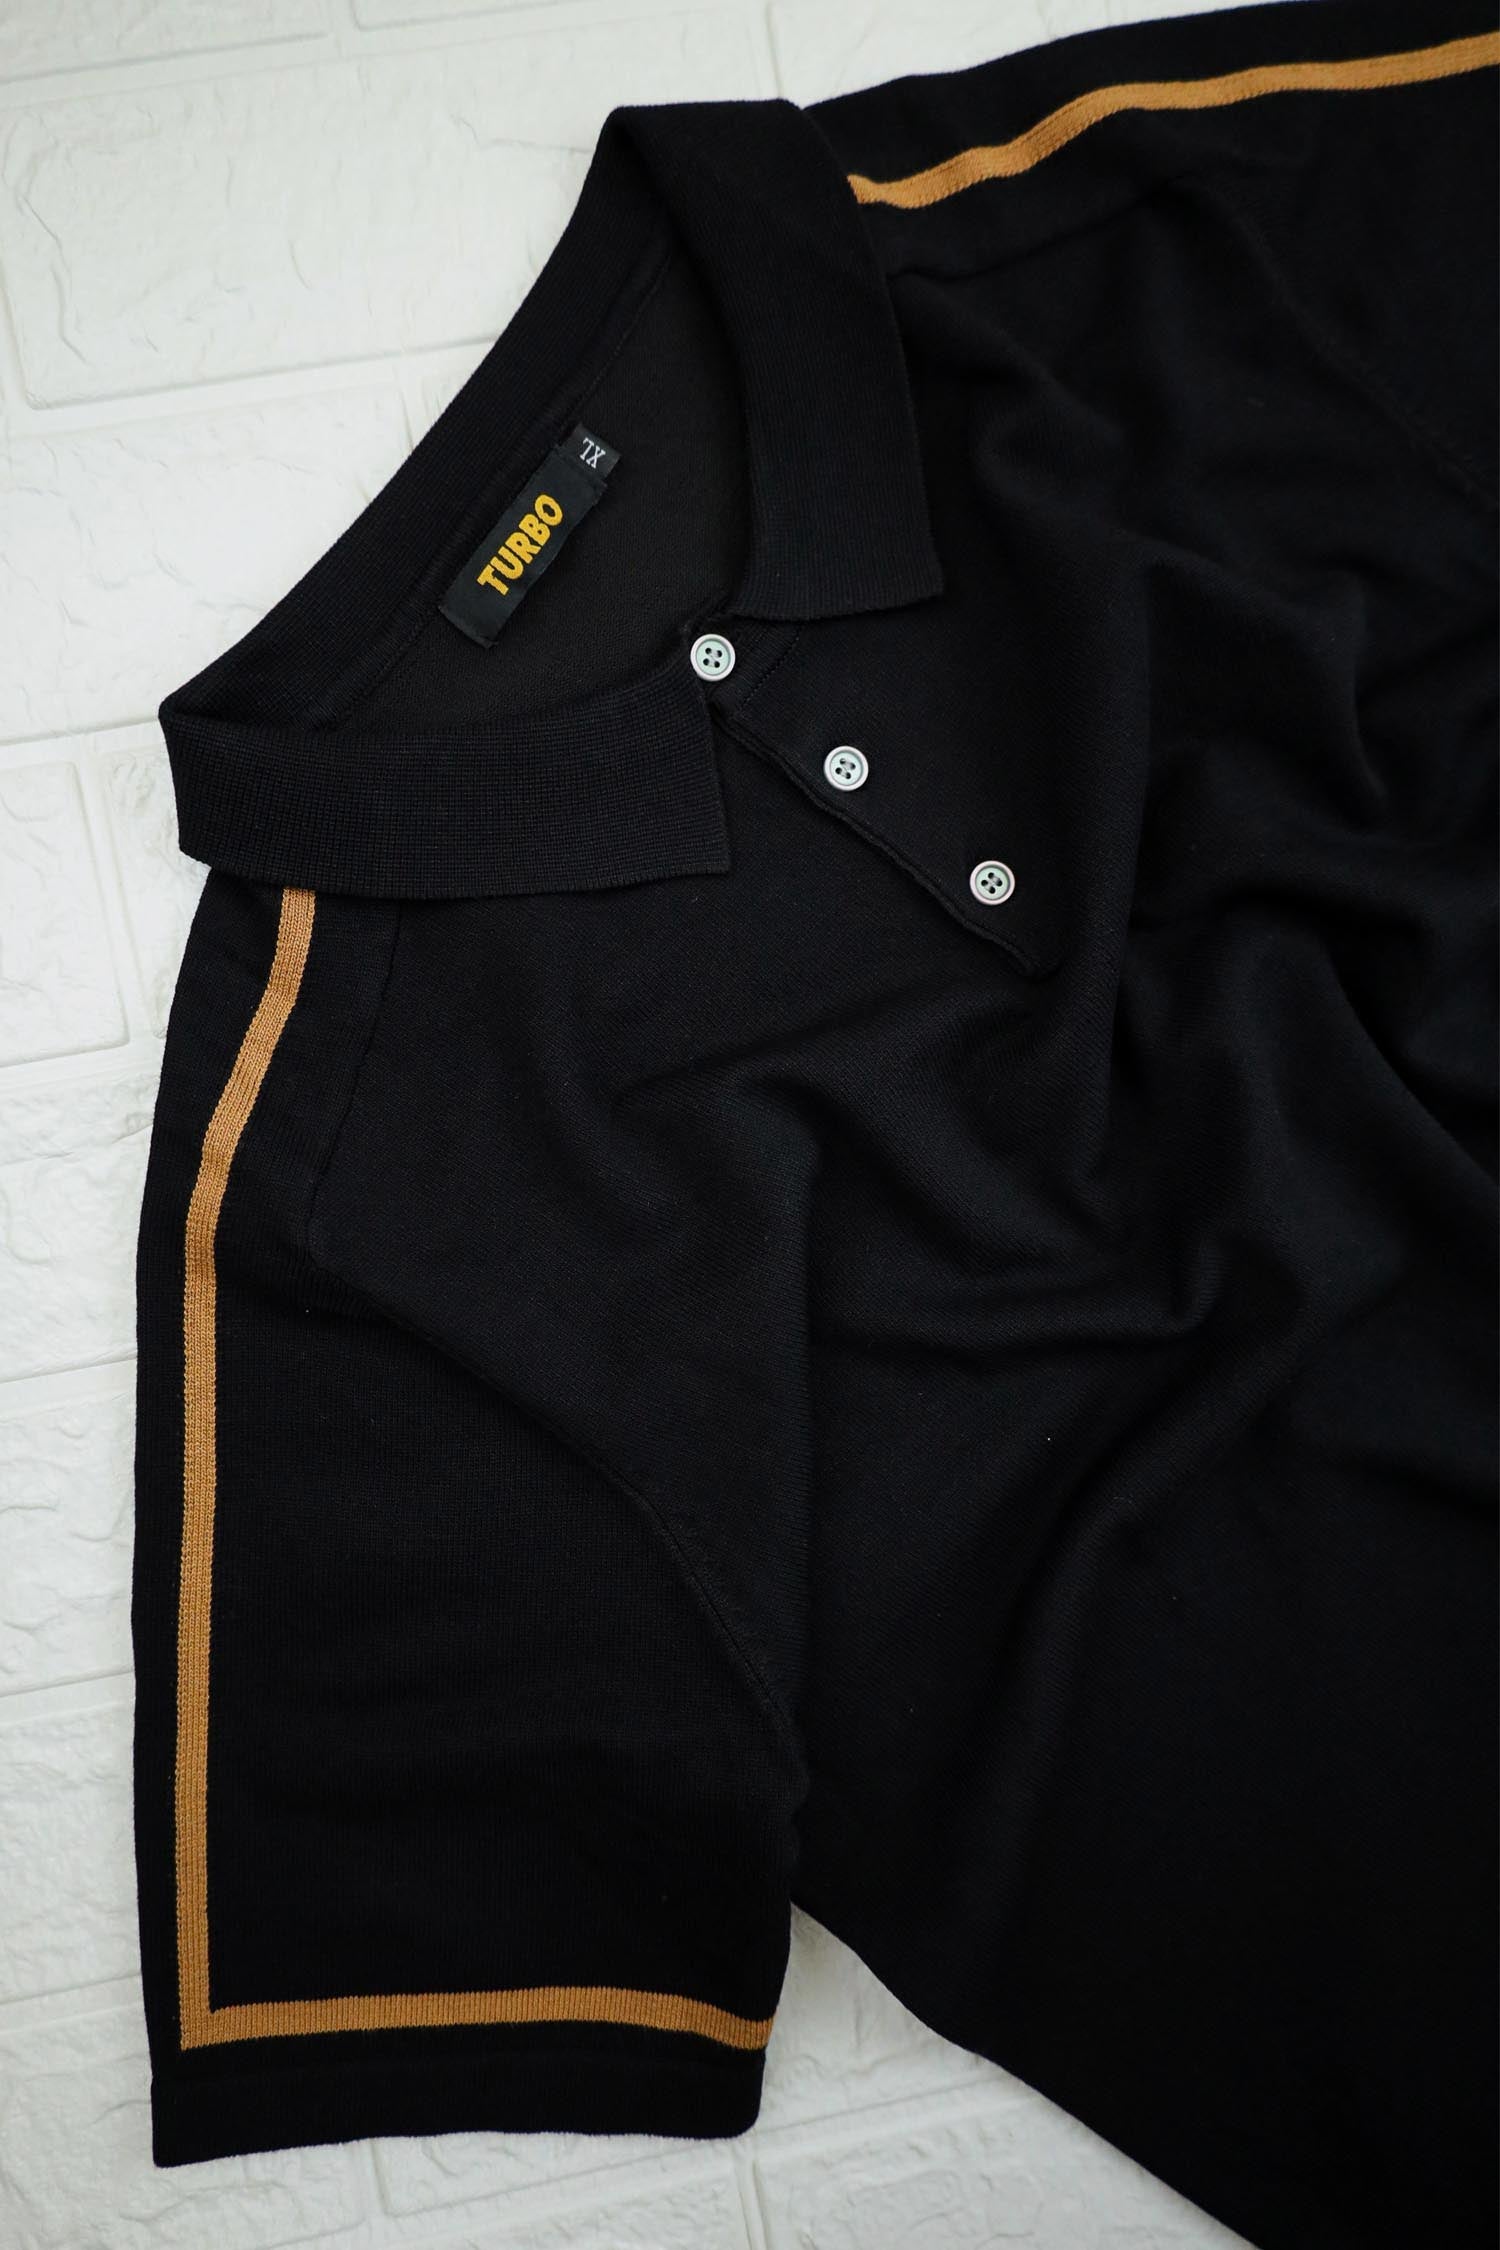 Shoulder Stripes Turbo Jumper Polo Shirts in Black